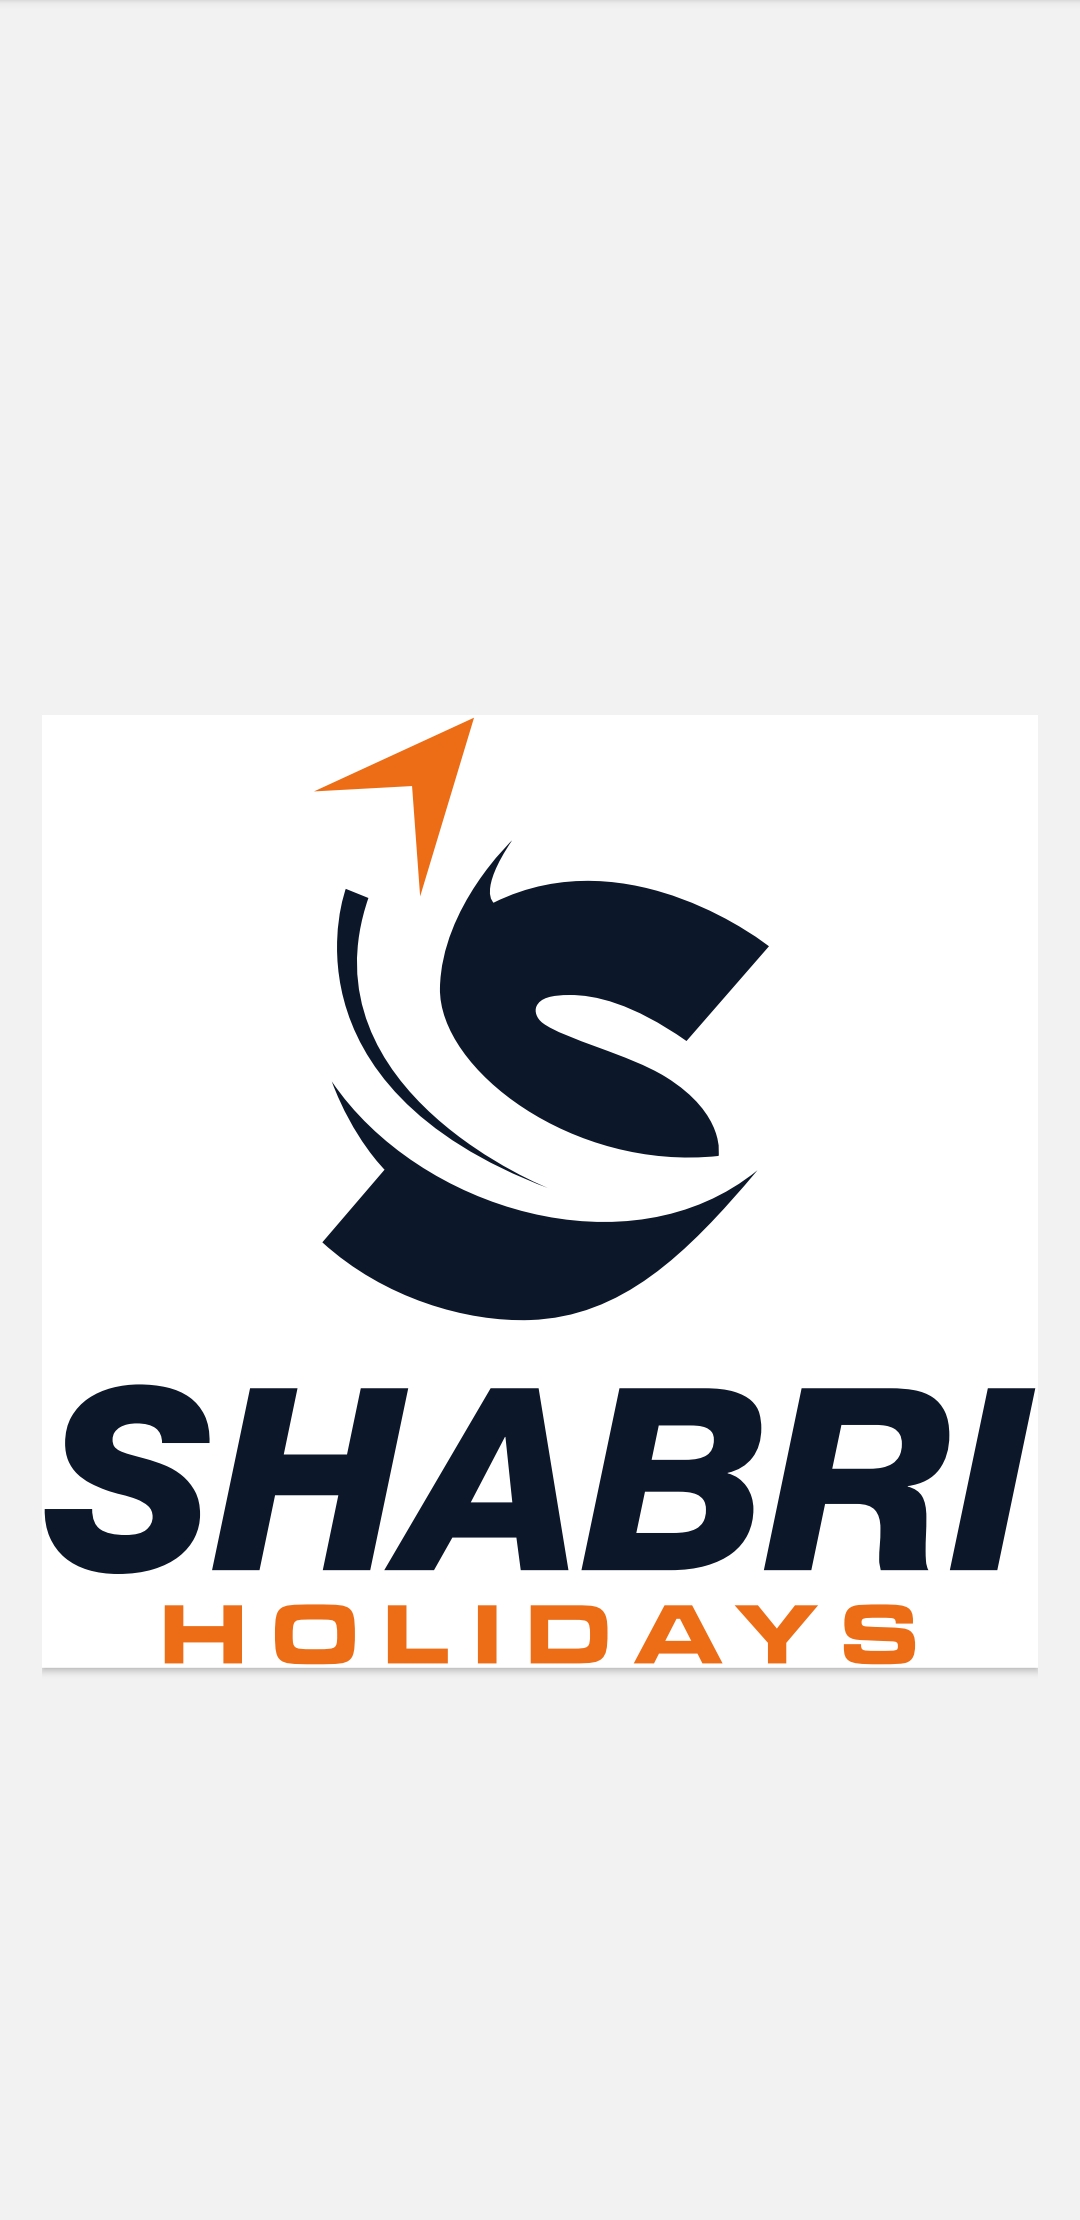 Shabri holidays